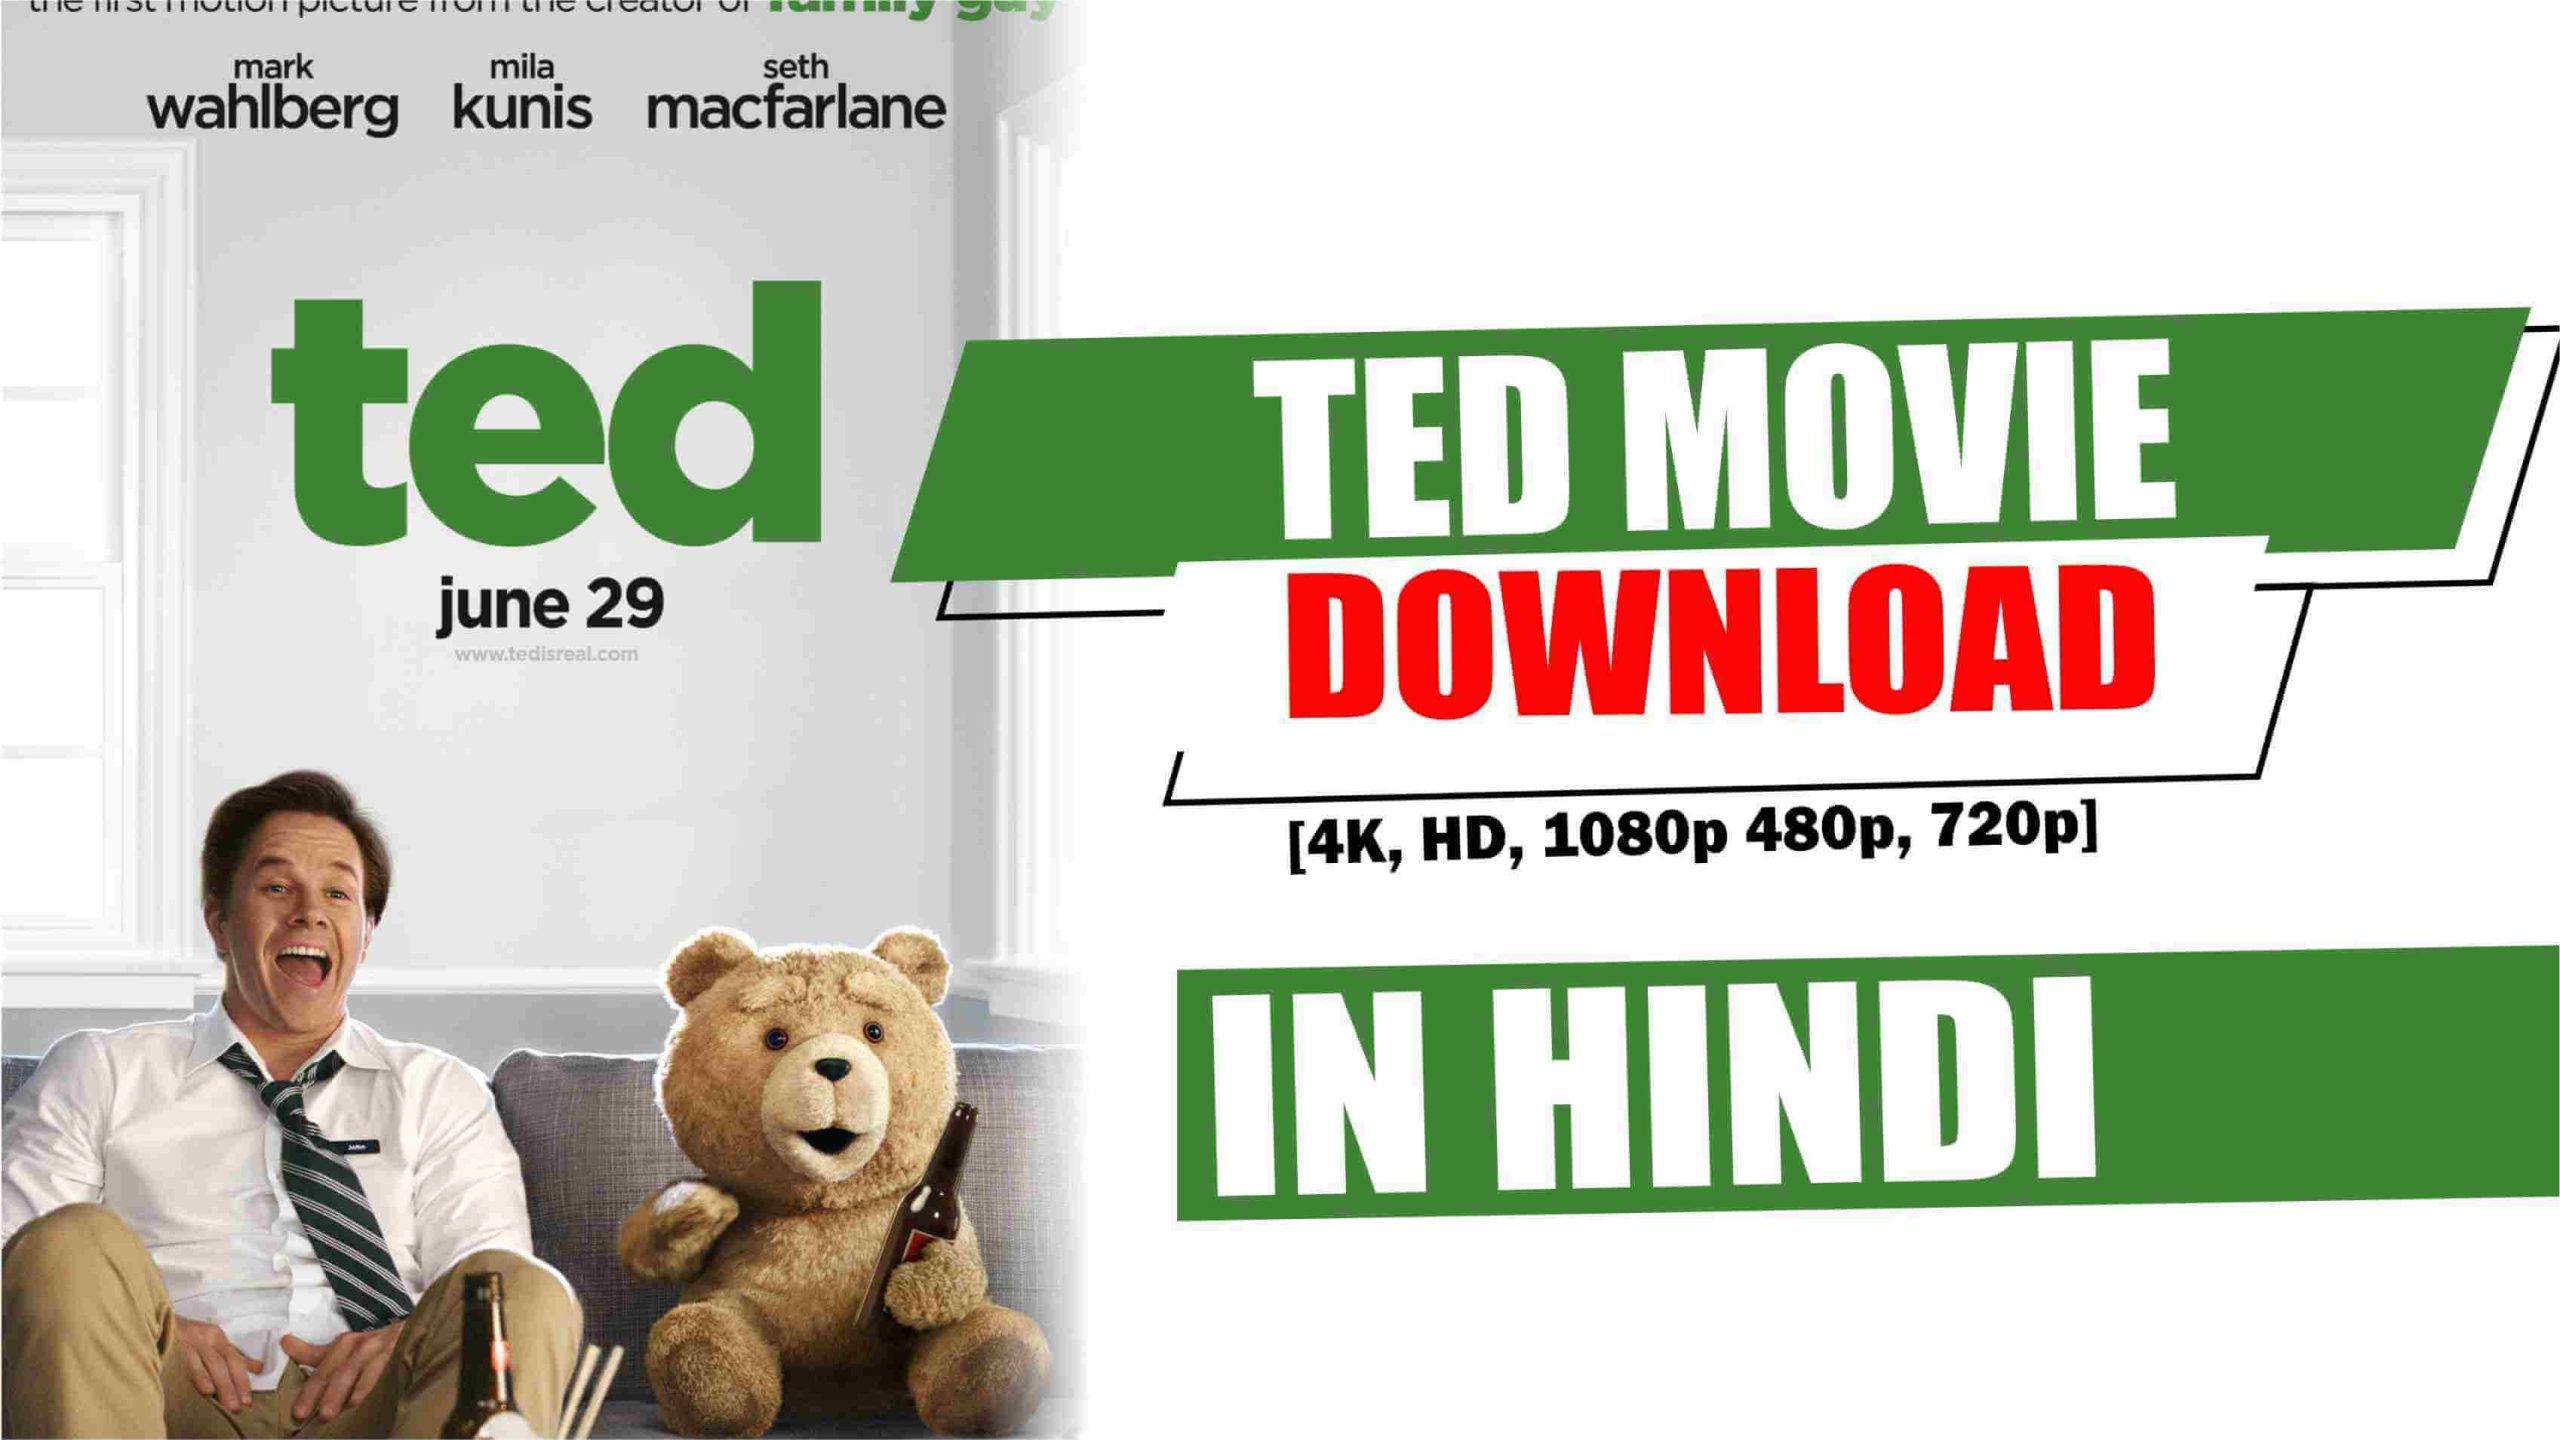 Ted Movie Download in Hindi Filmyzilla [4K, HD, 1080p 480p, 720p]